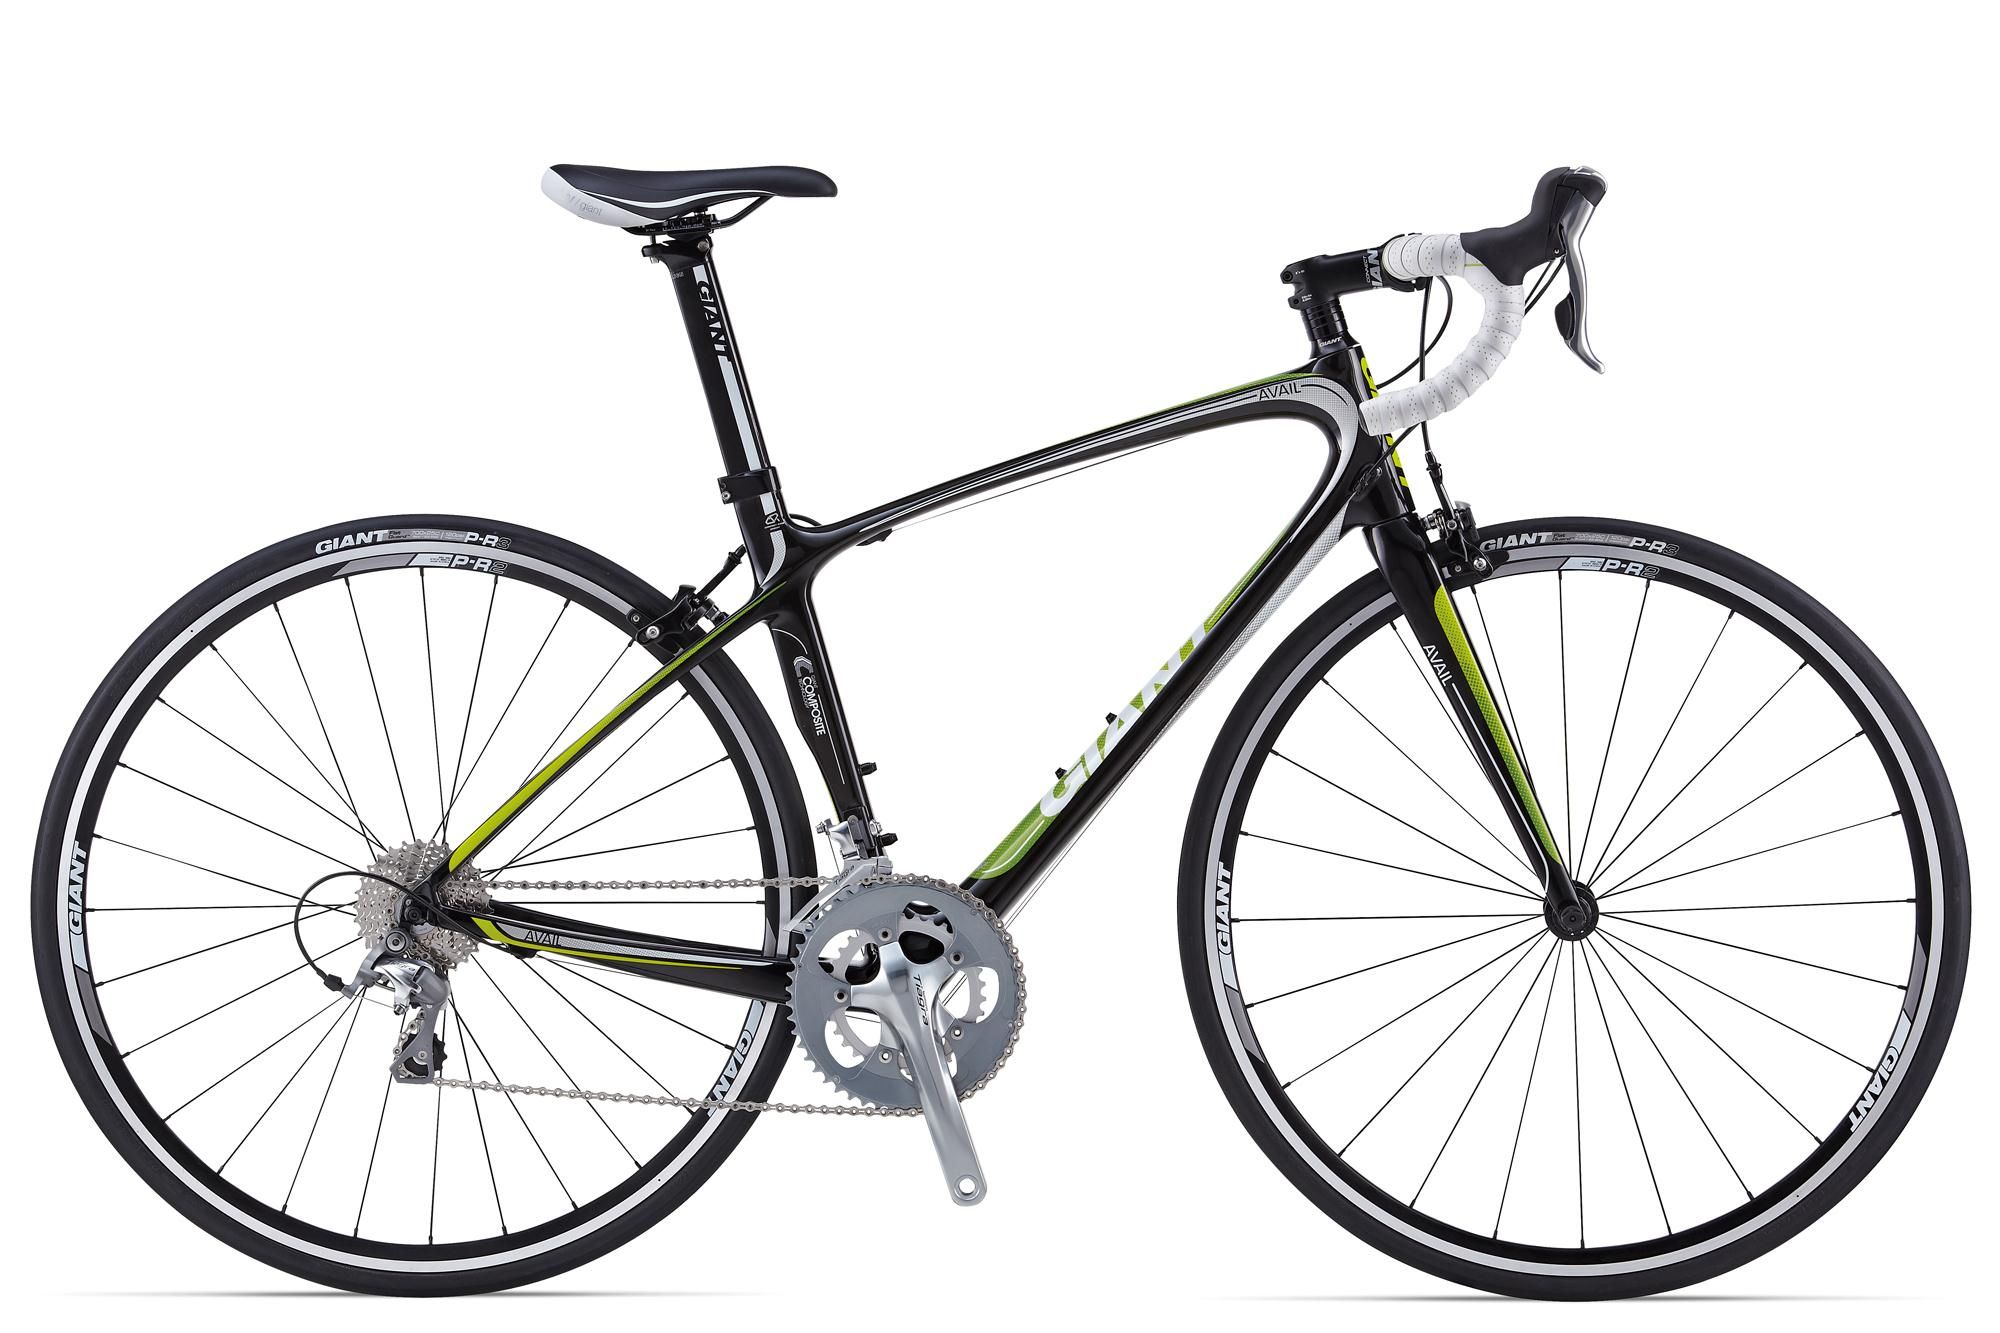  Отзывы о Шоссейном велосипеде Giant Avail Composite 3 2014